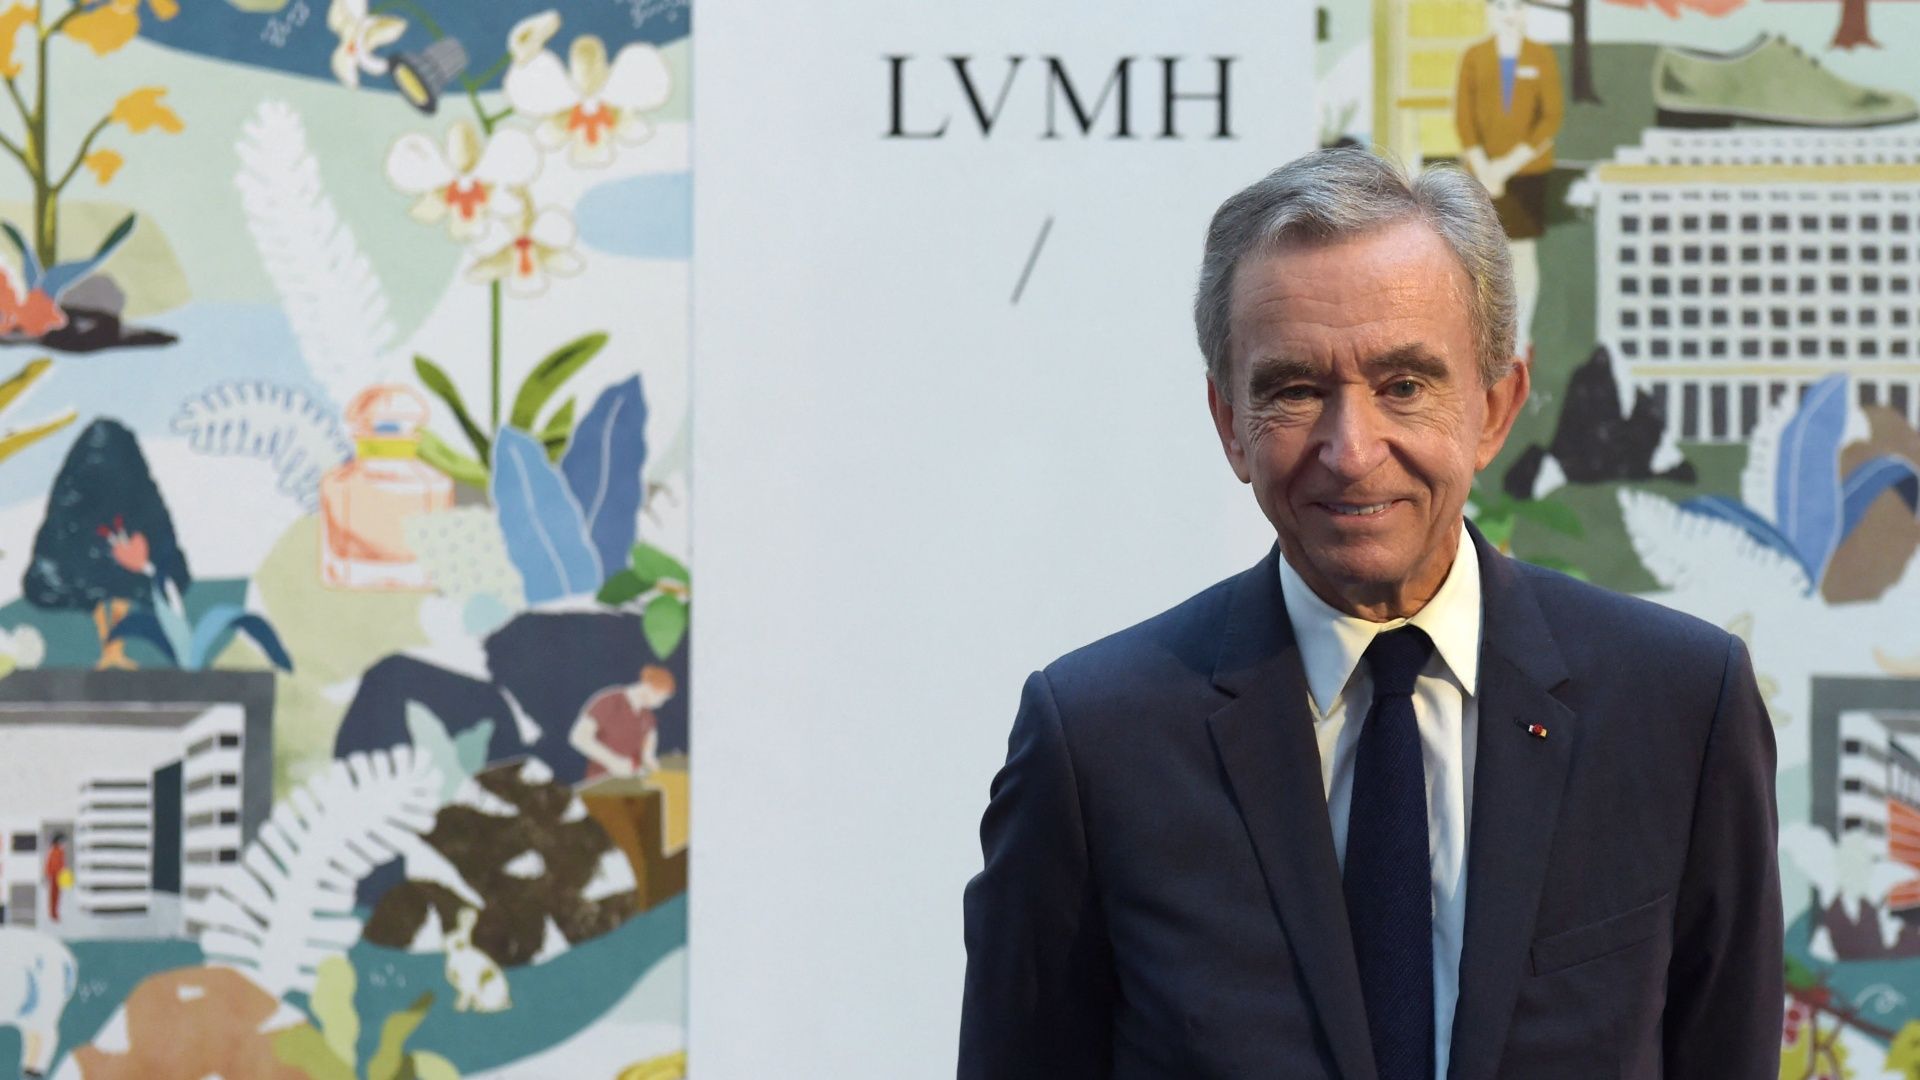 Bernard Arnault: Chairman & CEO of LVMH